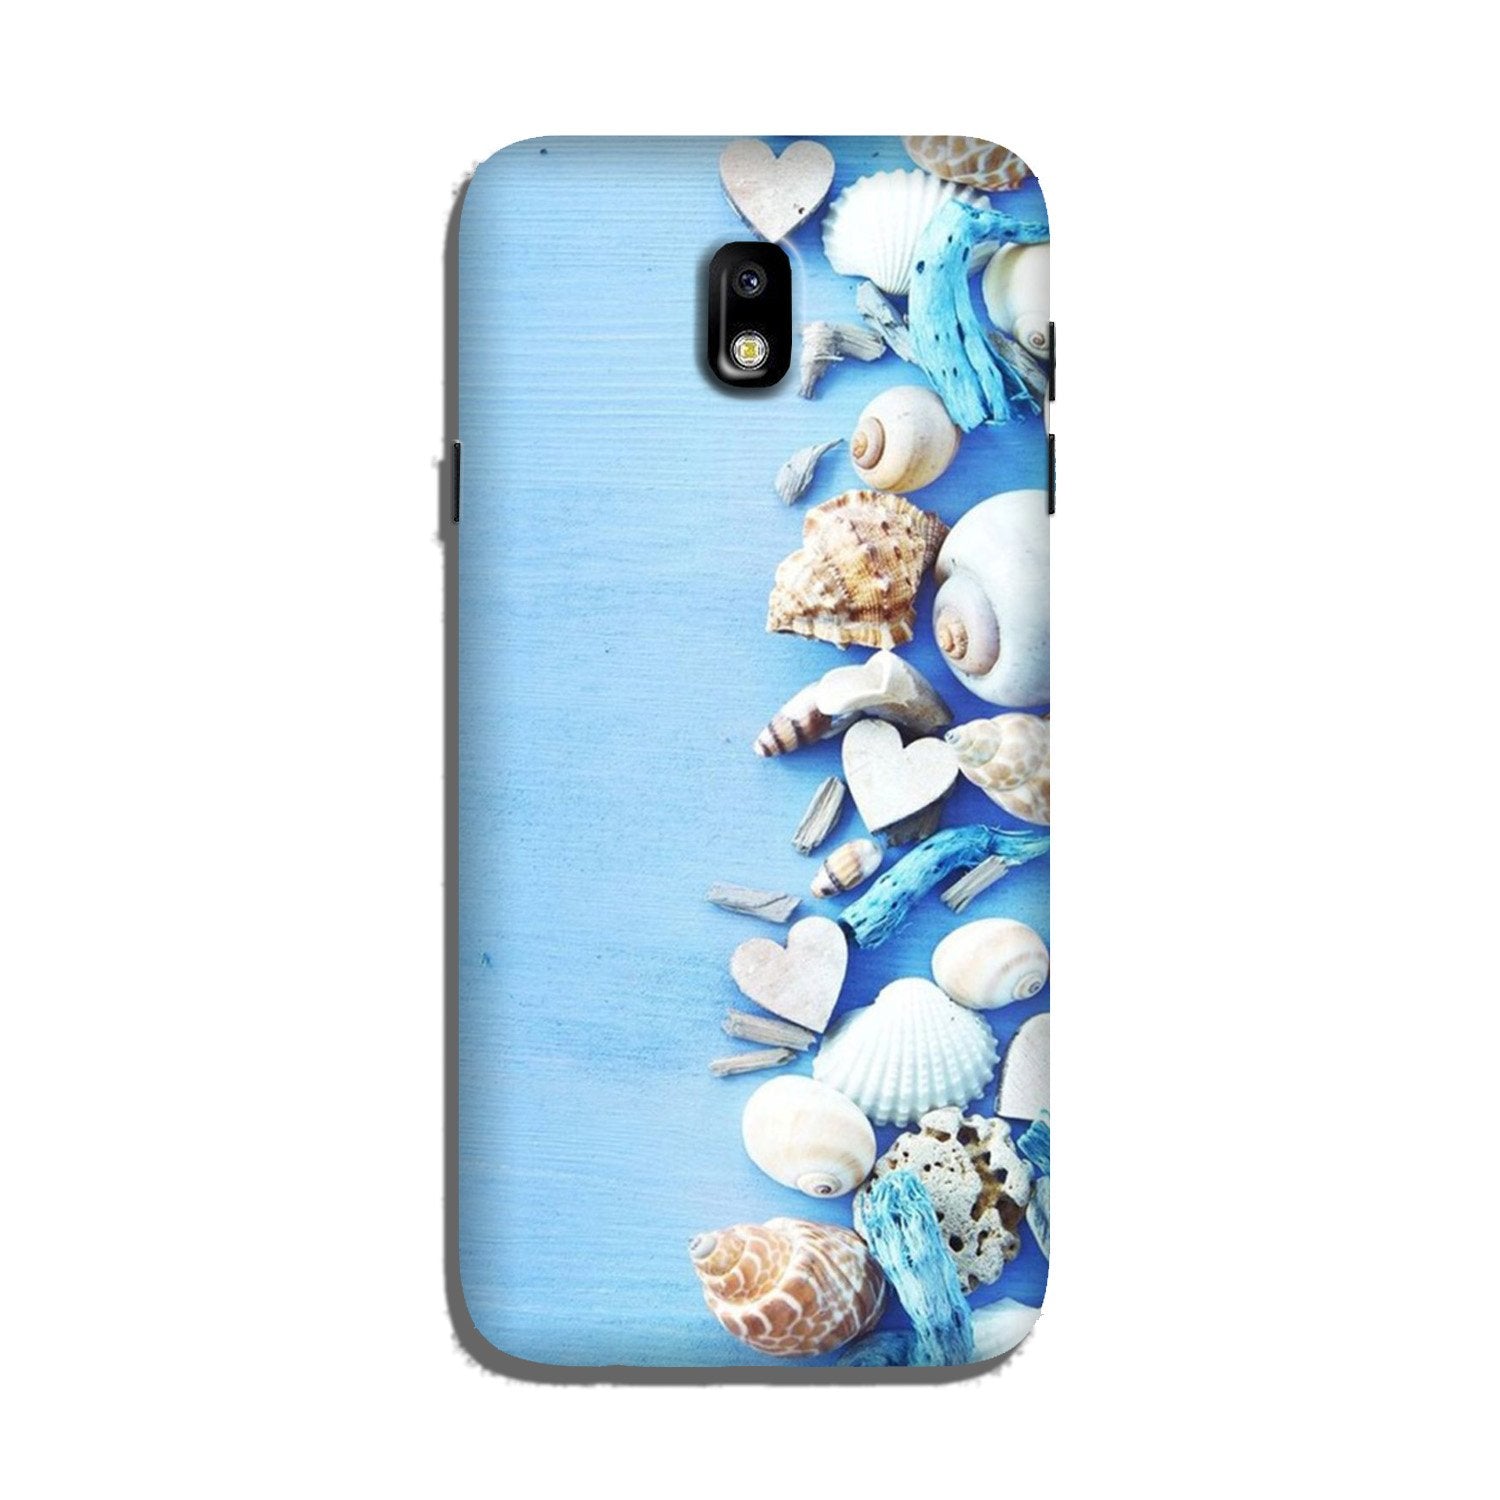 Sea Shells2 Case for Galaxy J7 Pro